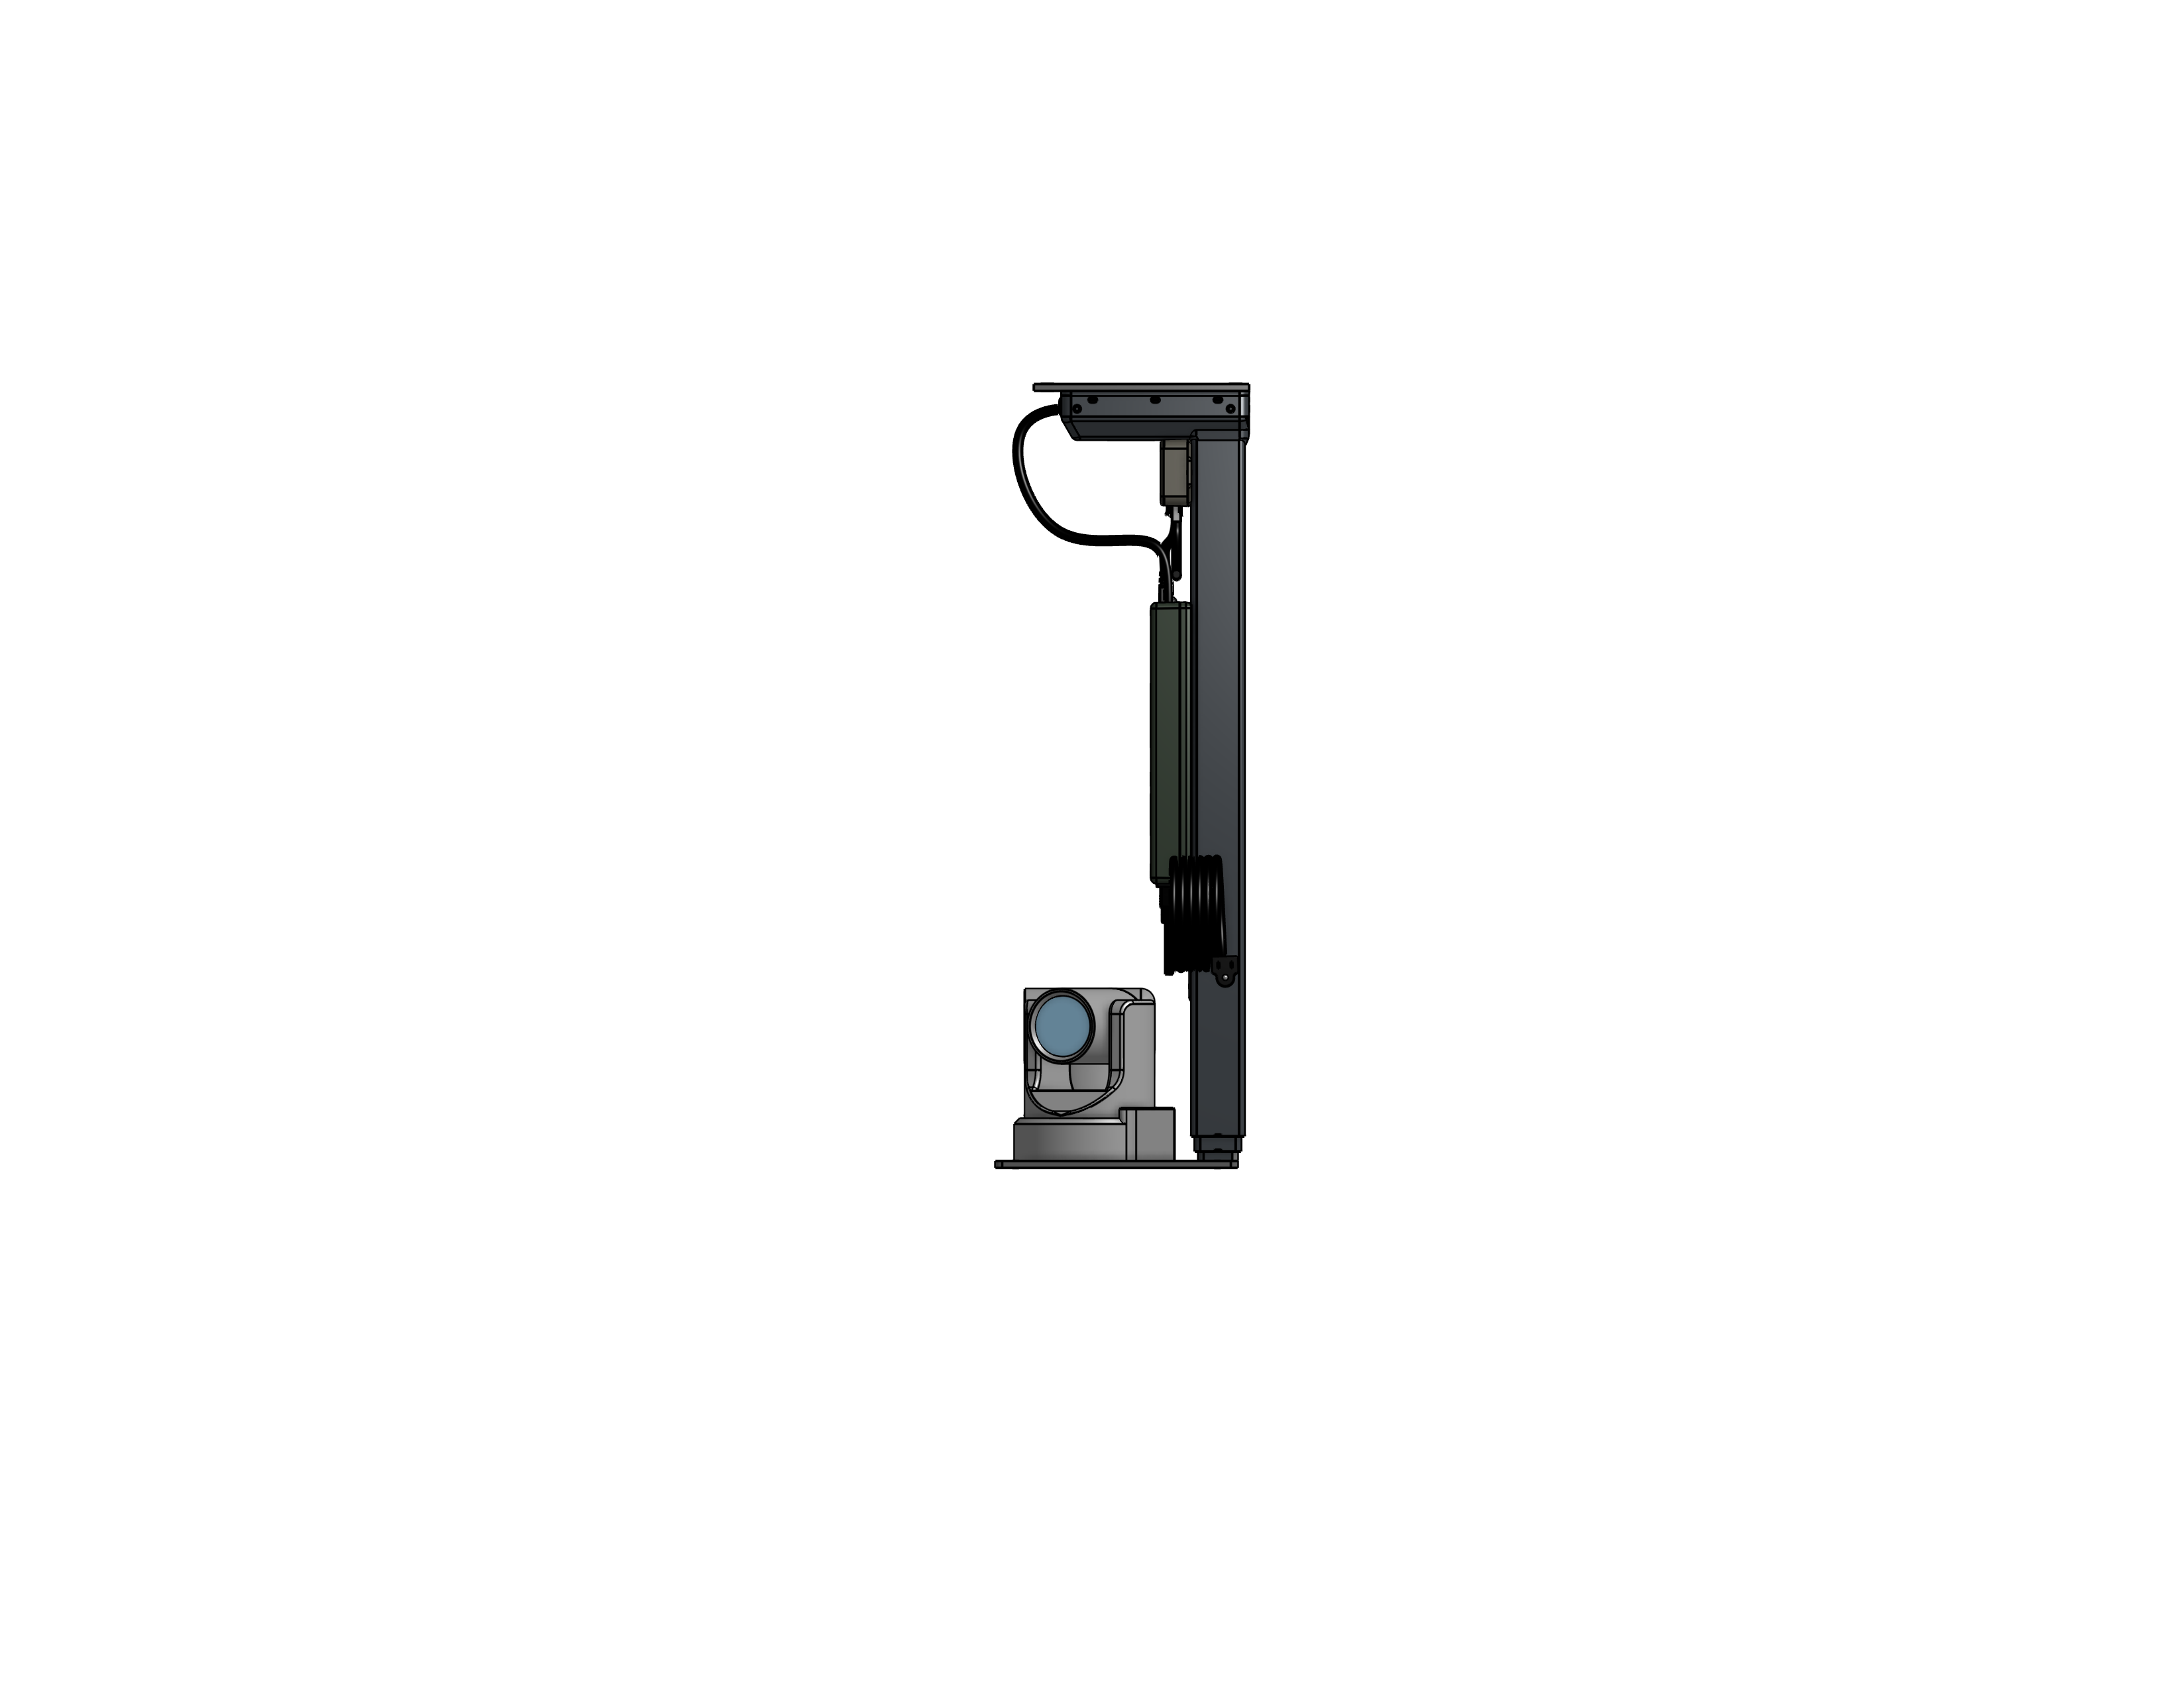 Dual PTZ Camera Lift - Ceiling Mounted  - Travel: 38 Inches - Model DAPTZ-30-38